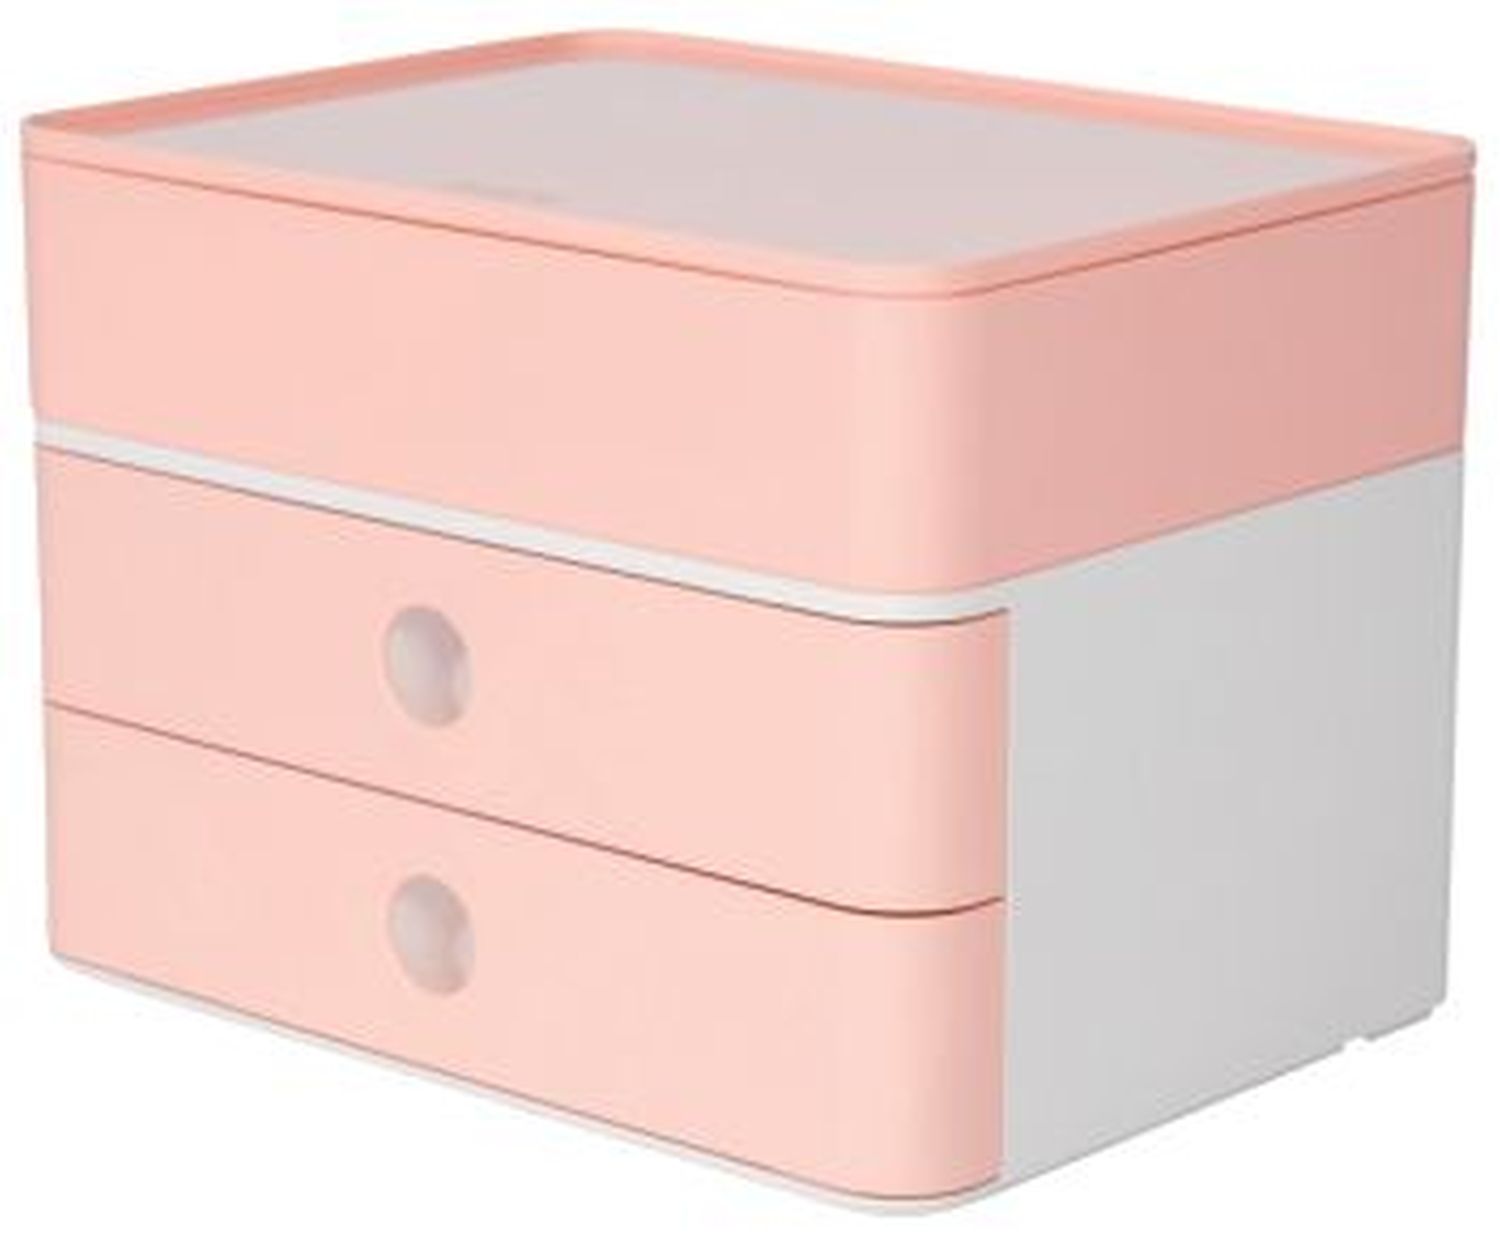 HAN 1100-86 Allison Schubladenbox 2 Laden+Box weiß/rosa